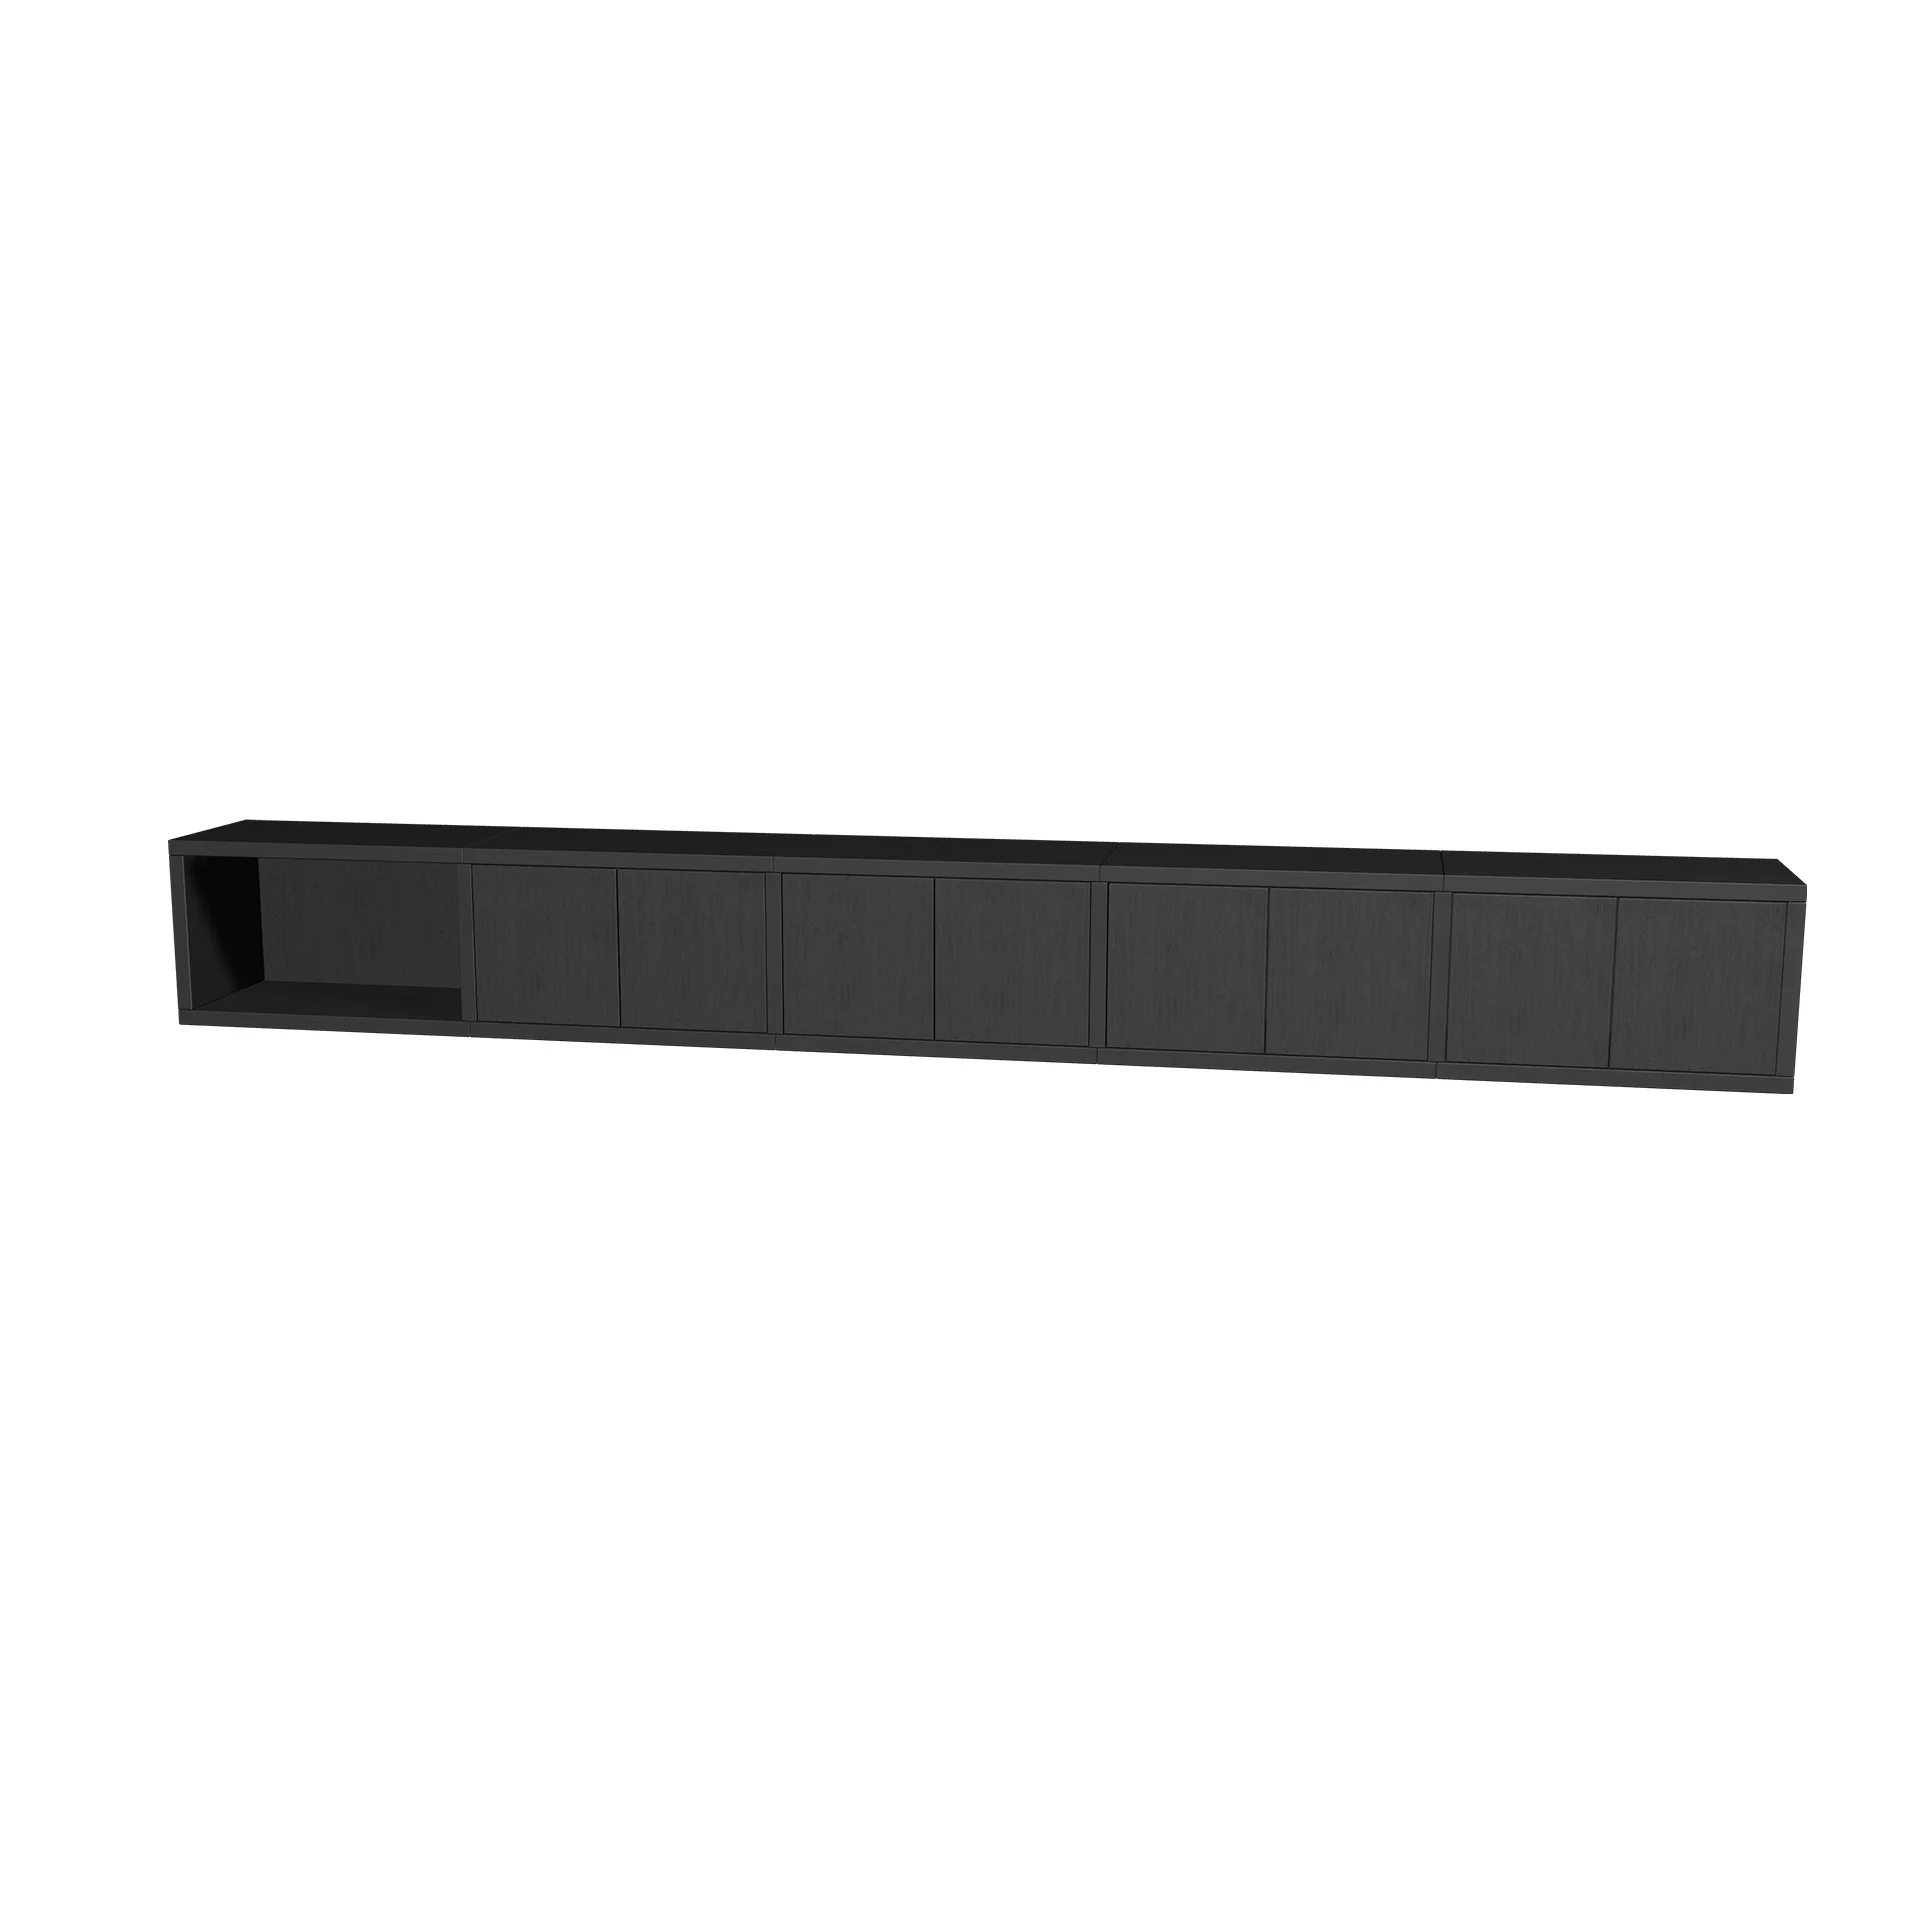 TSFC013 in zwart eiken meubelpaneel